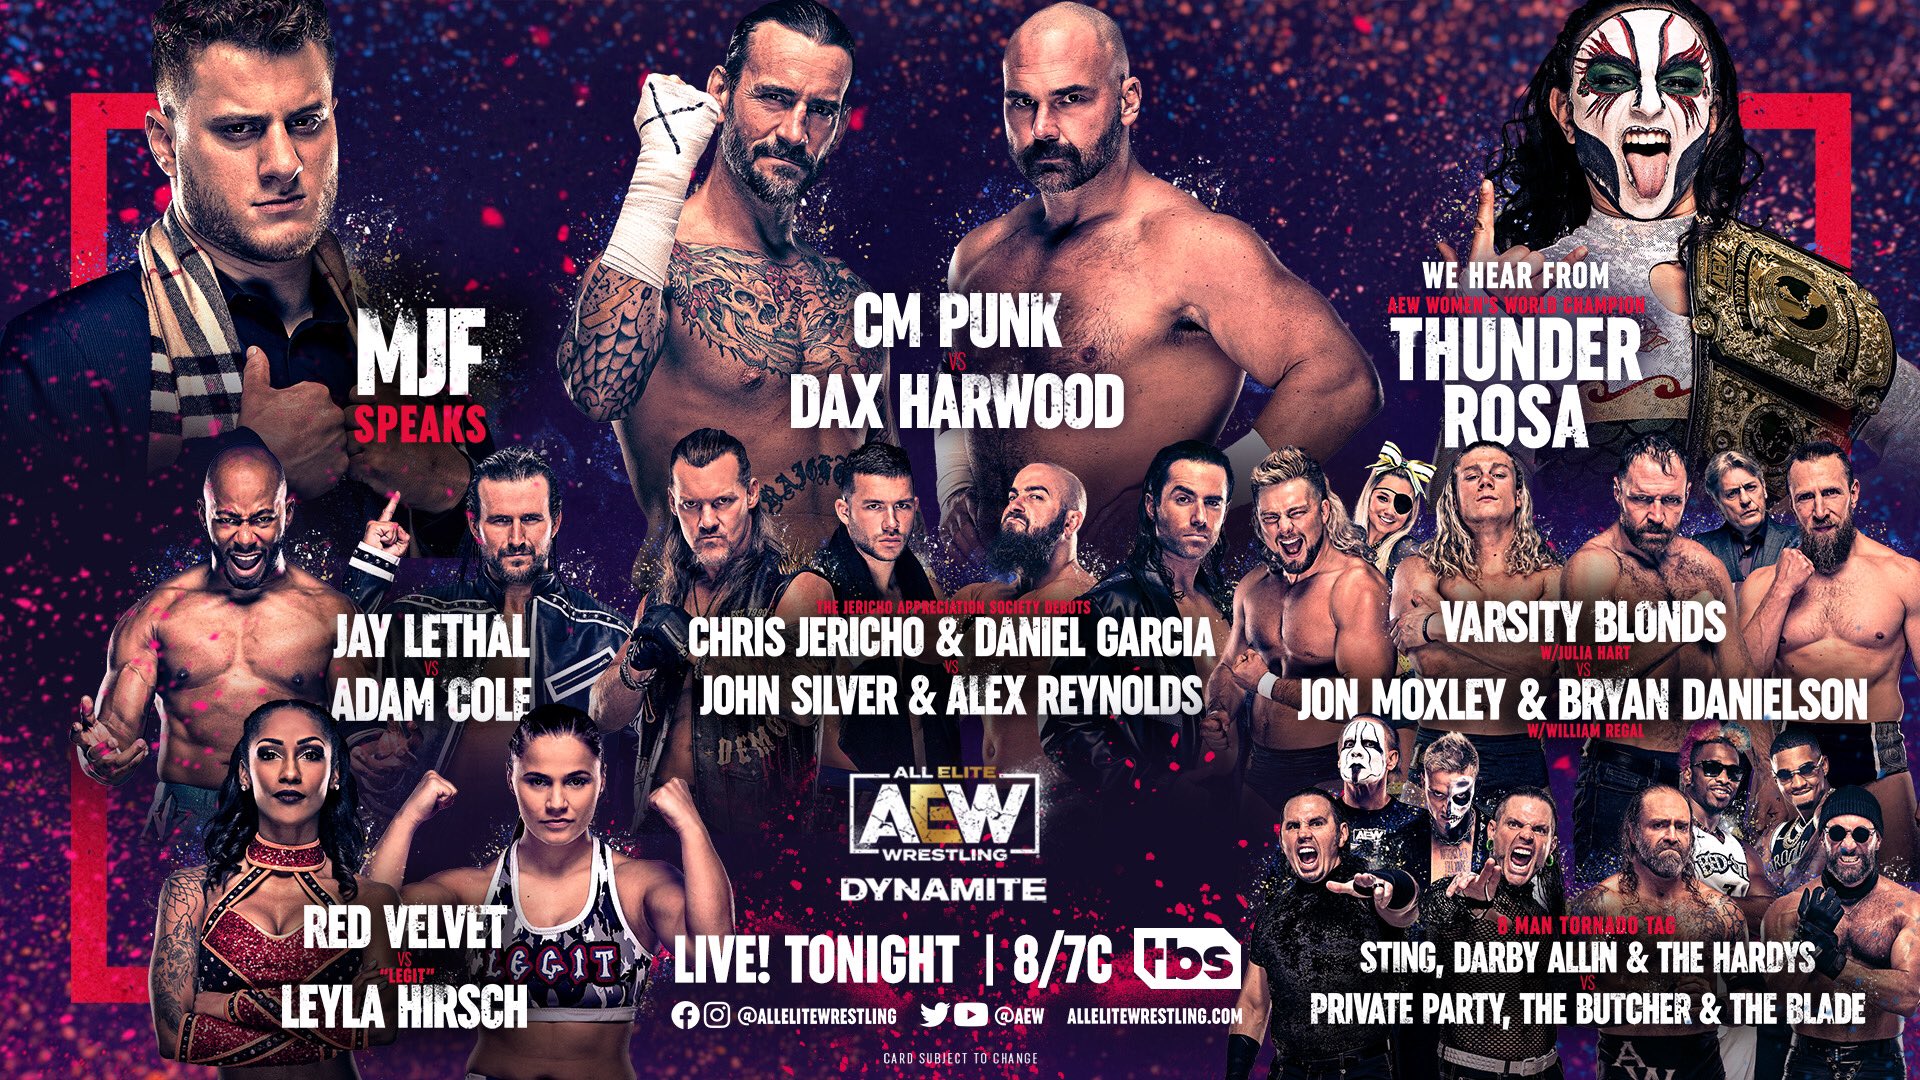 AEW Dynamite Results Mar. 23, 2022 Jericho & Garcia vs. Silver